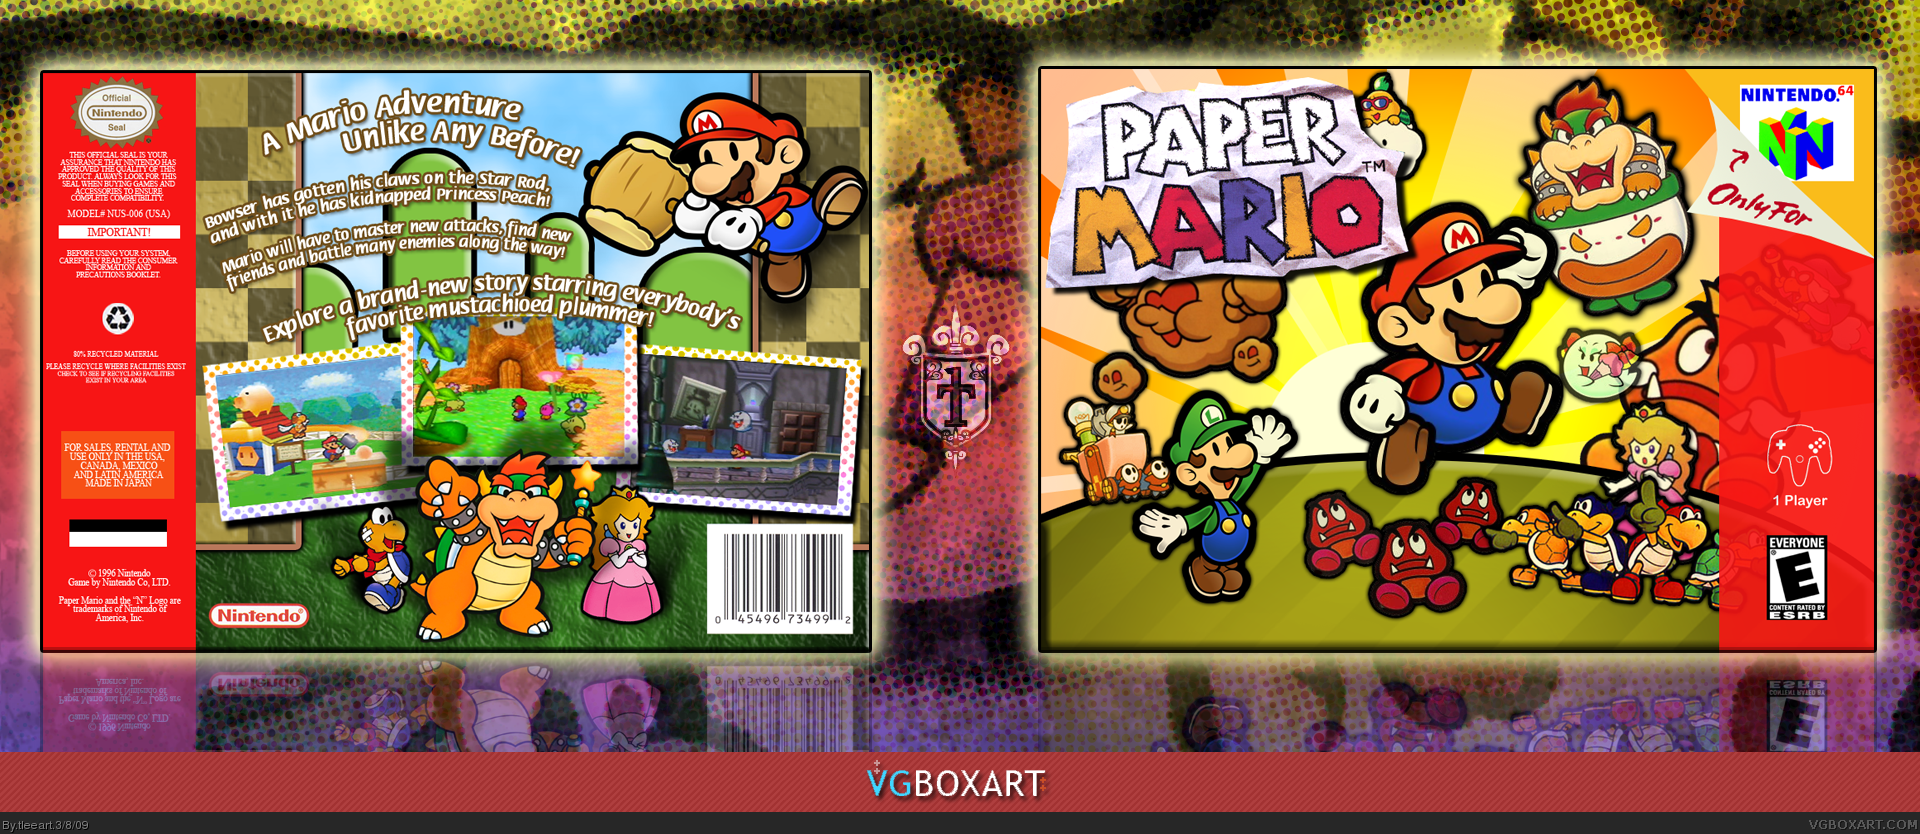 Paper Mario n64. Paper Mario обложка. Paper Mario GAMECUBE обложка. Пейпер Марио на Нинтендо 64. Nintendo 64 перевод